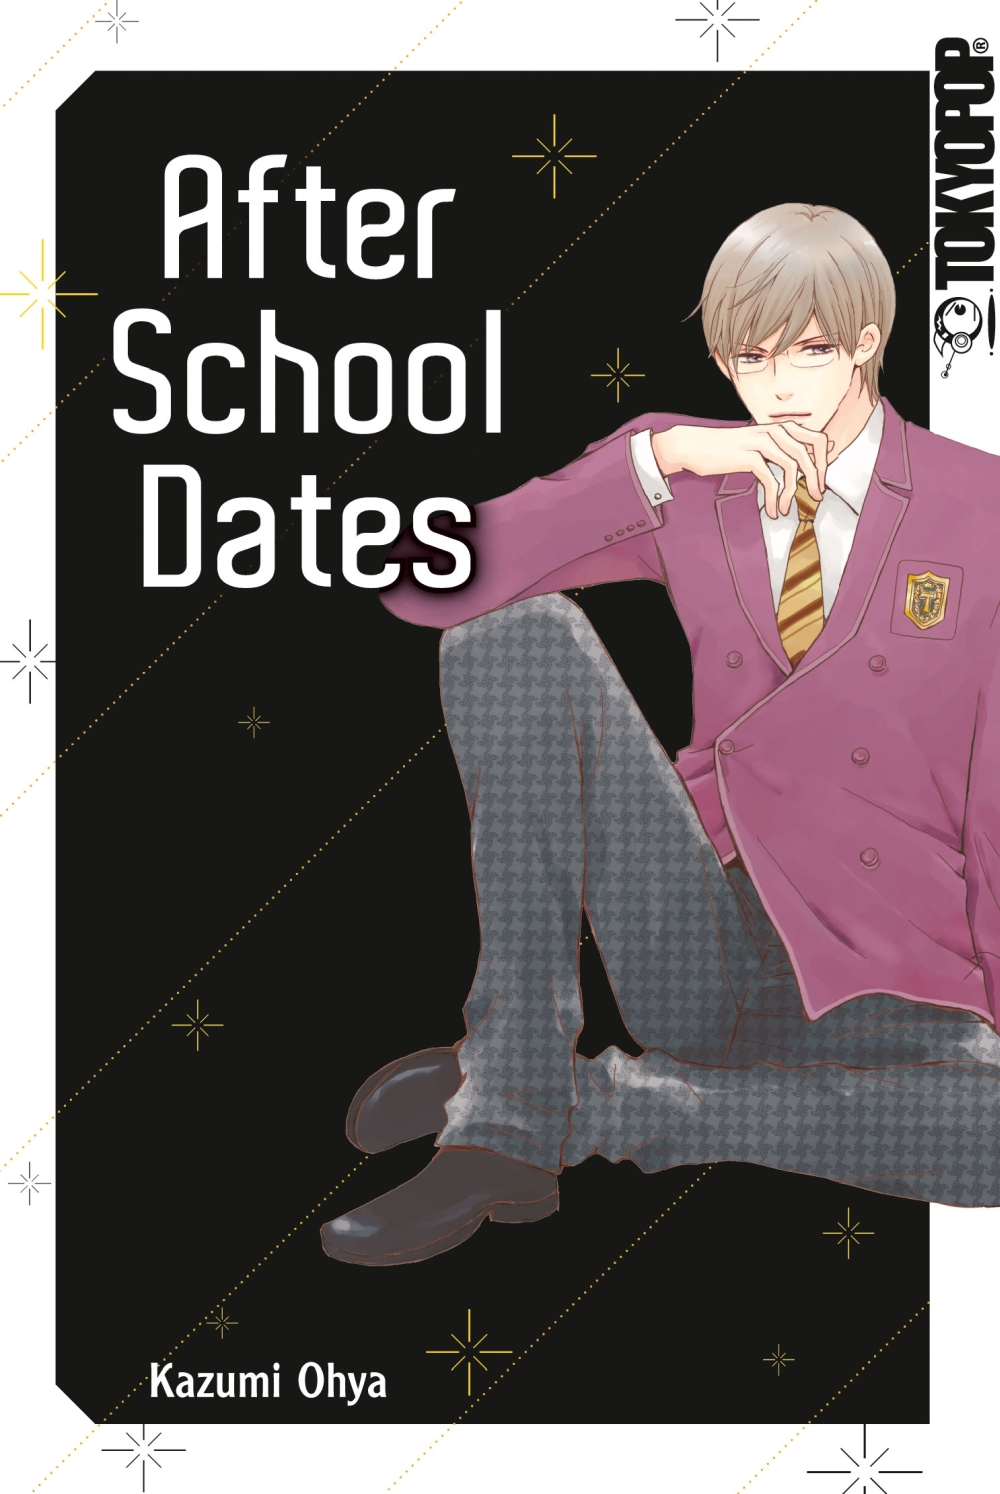 After School Dates Manga (New)